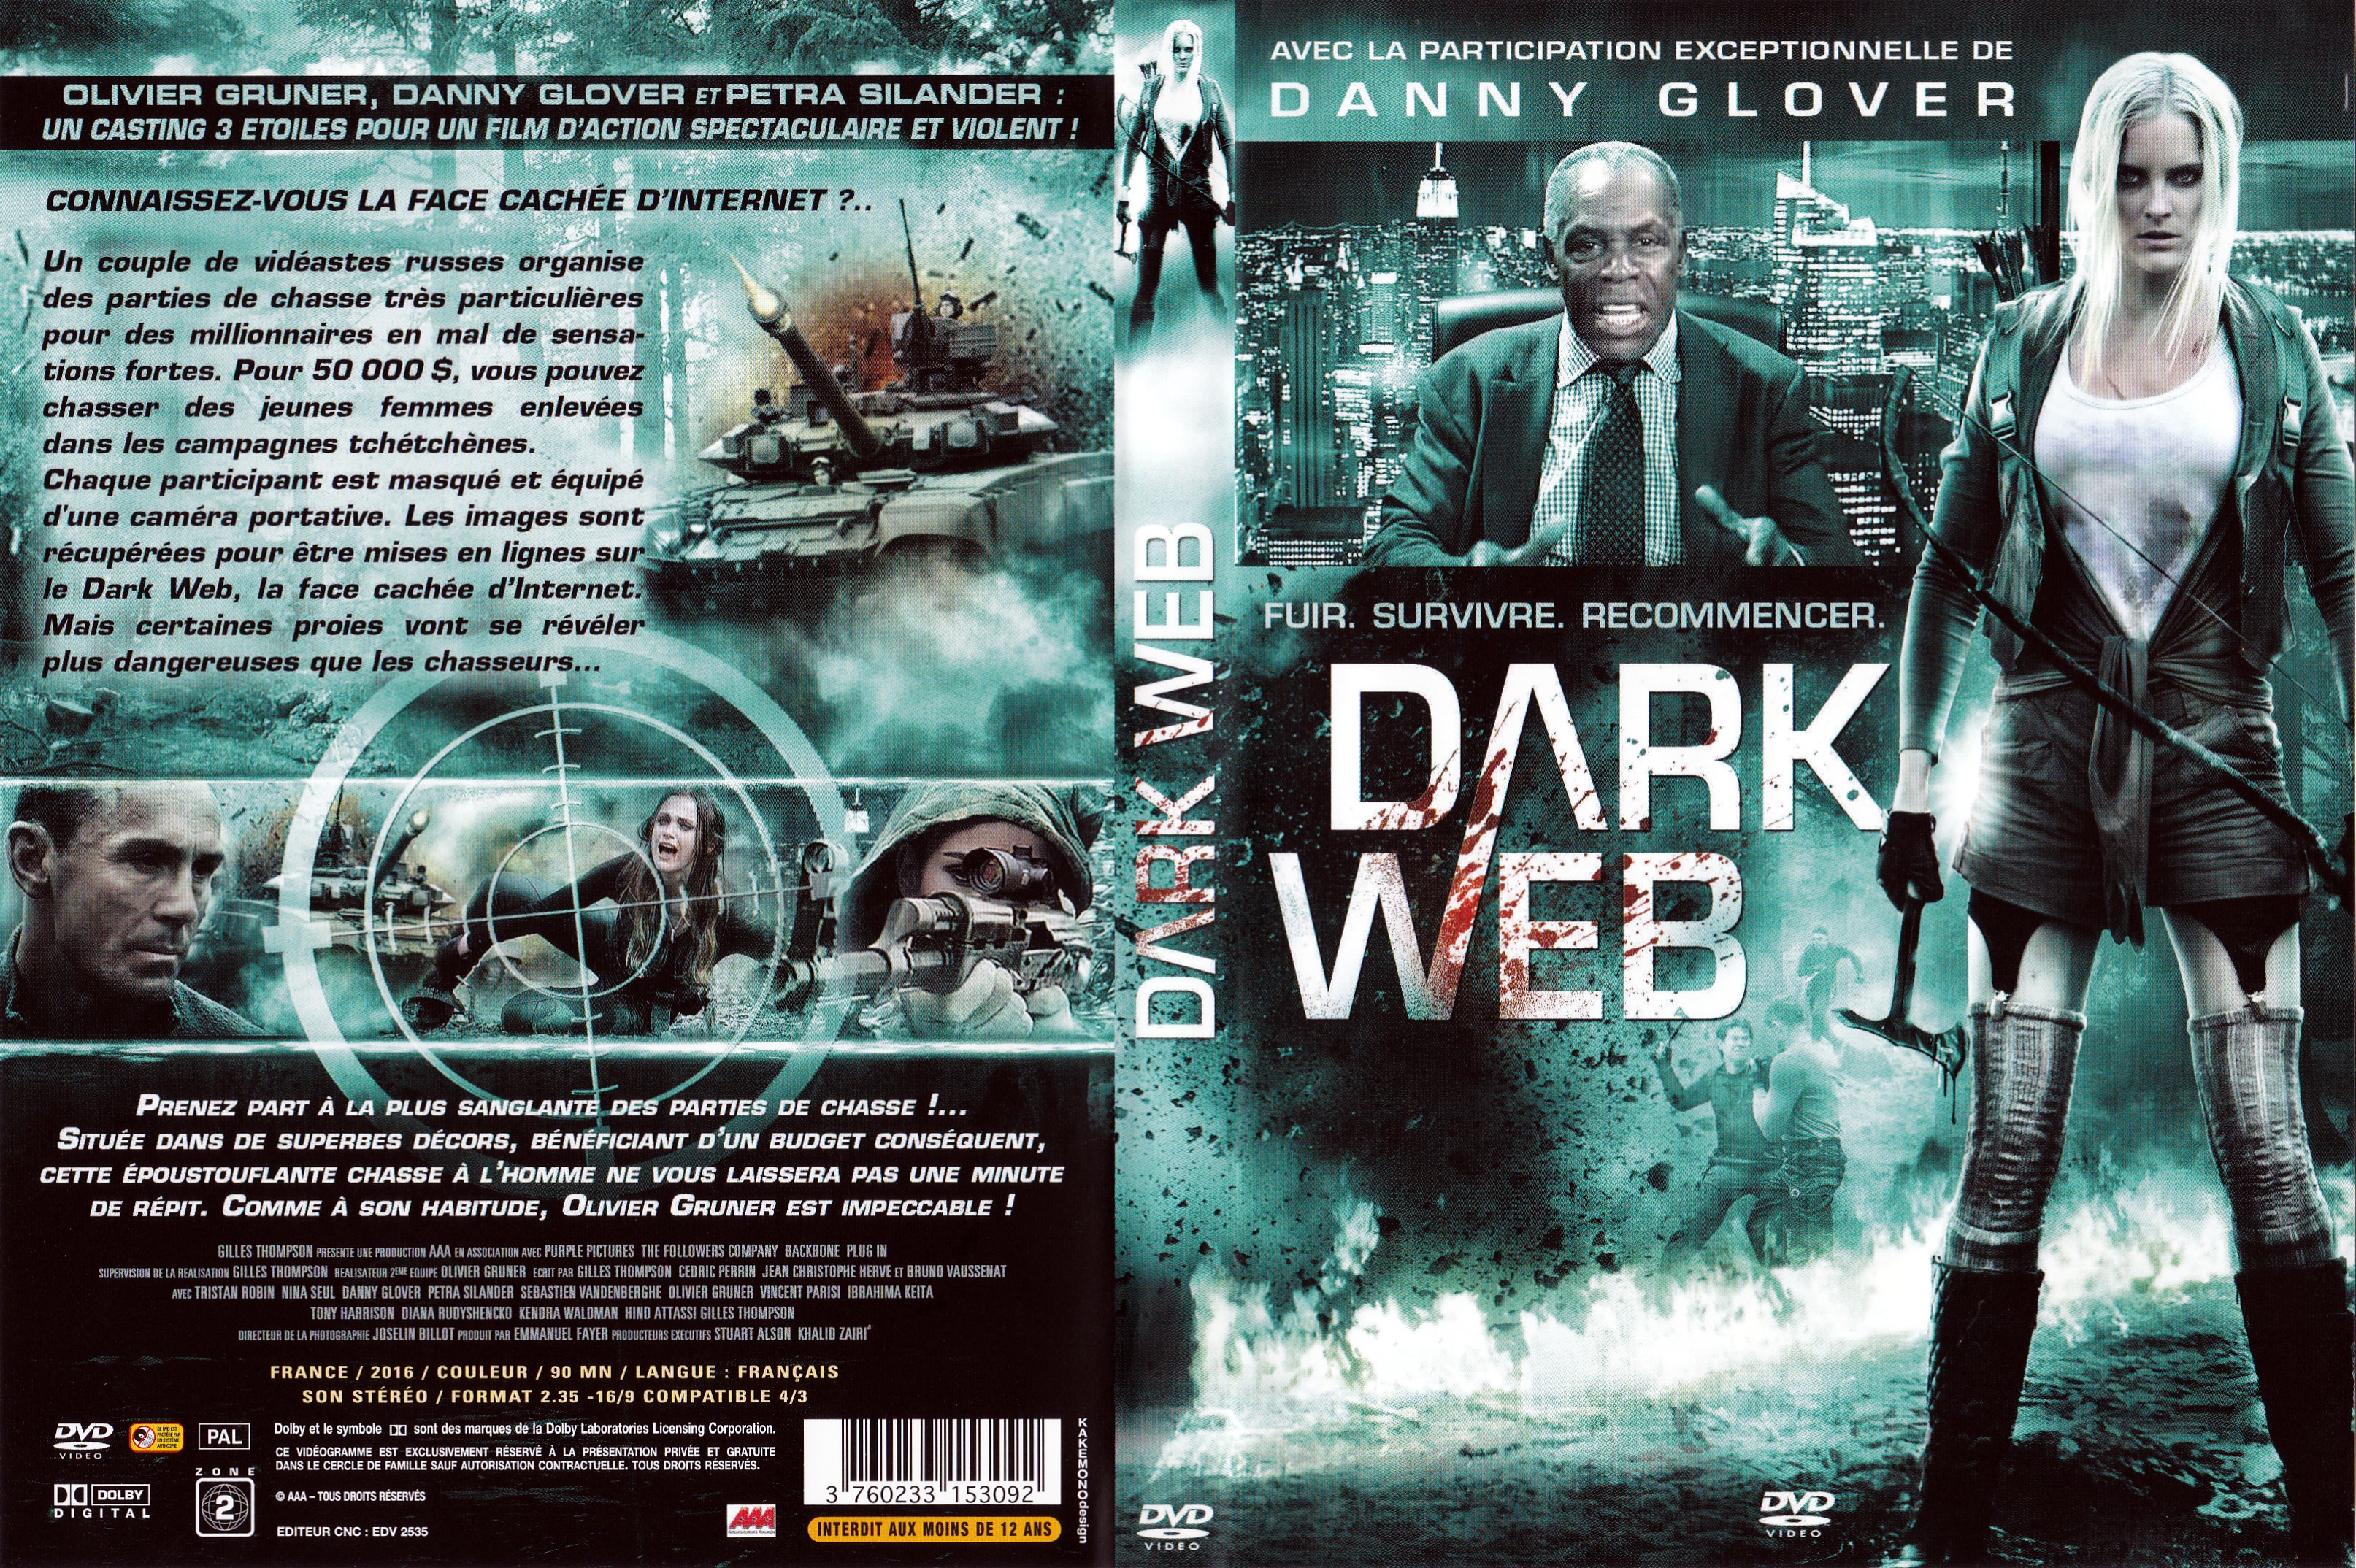 Jaquette DVD Dark web